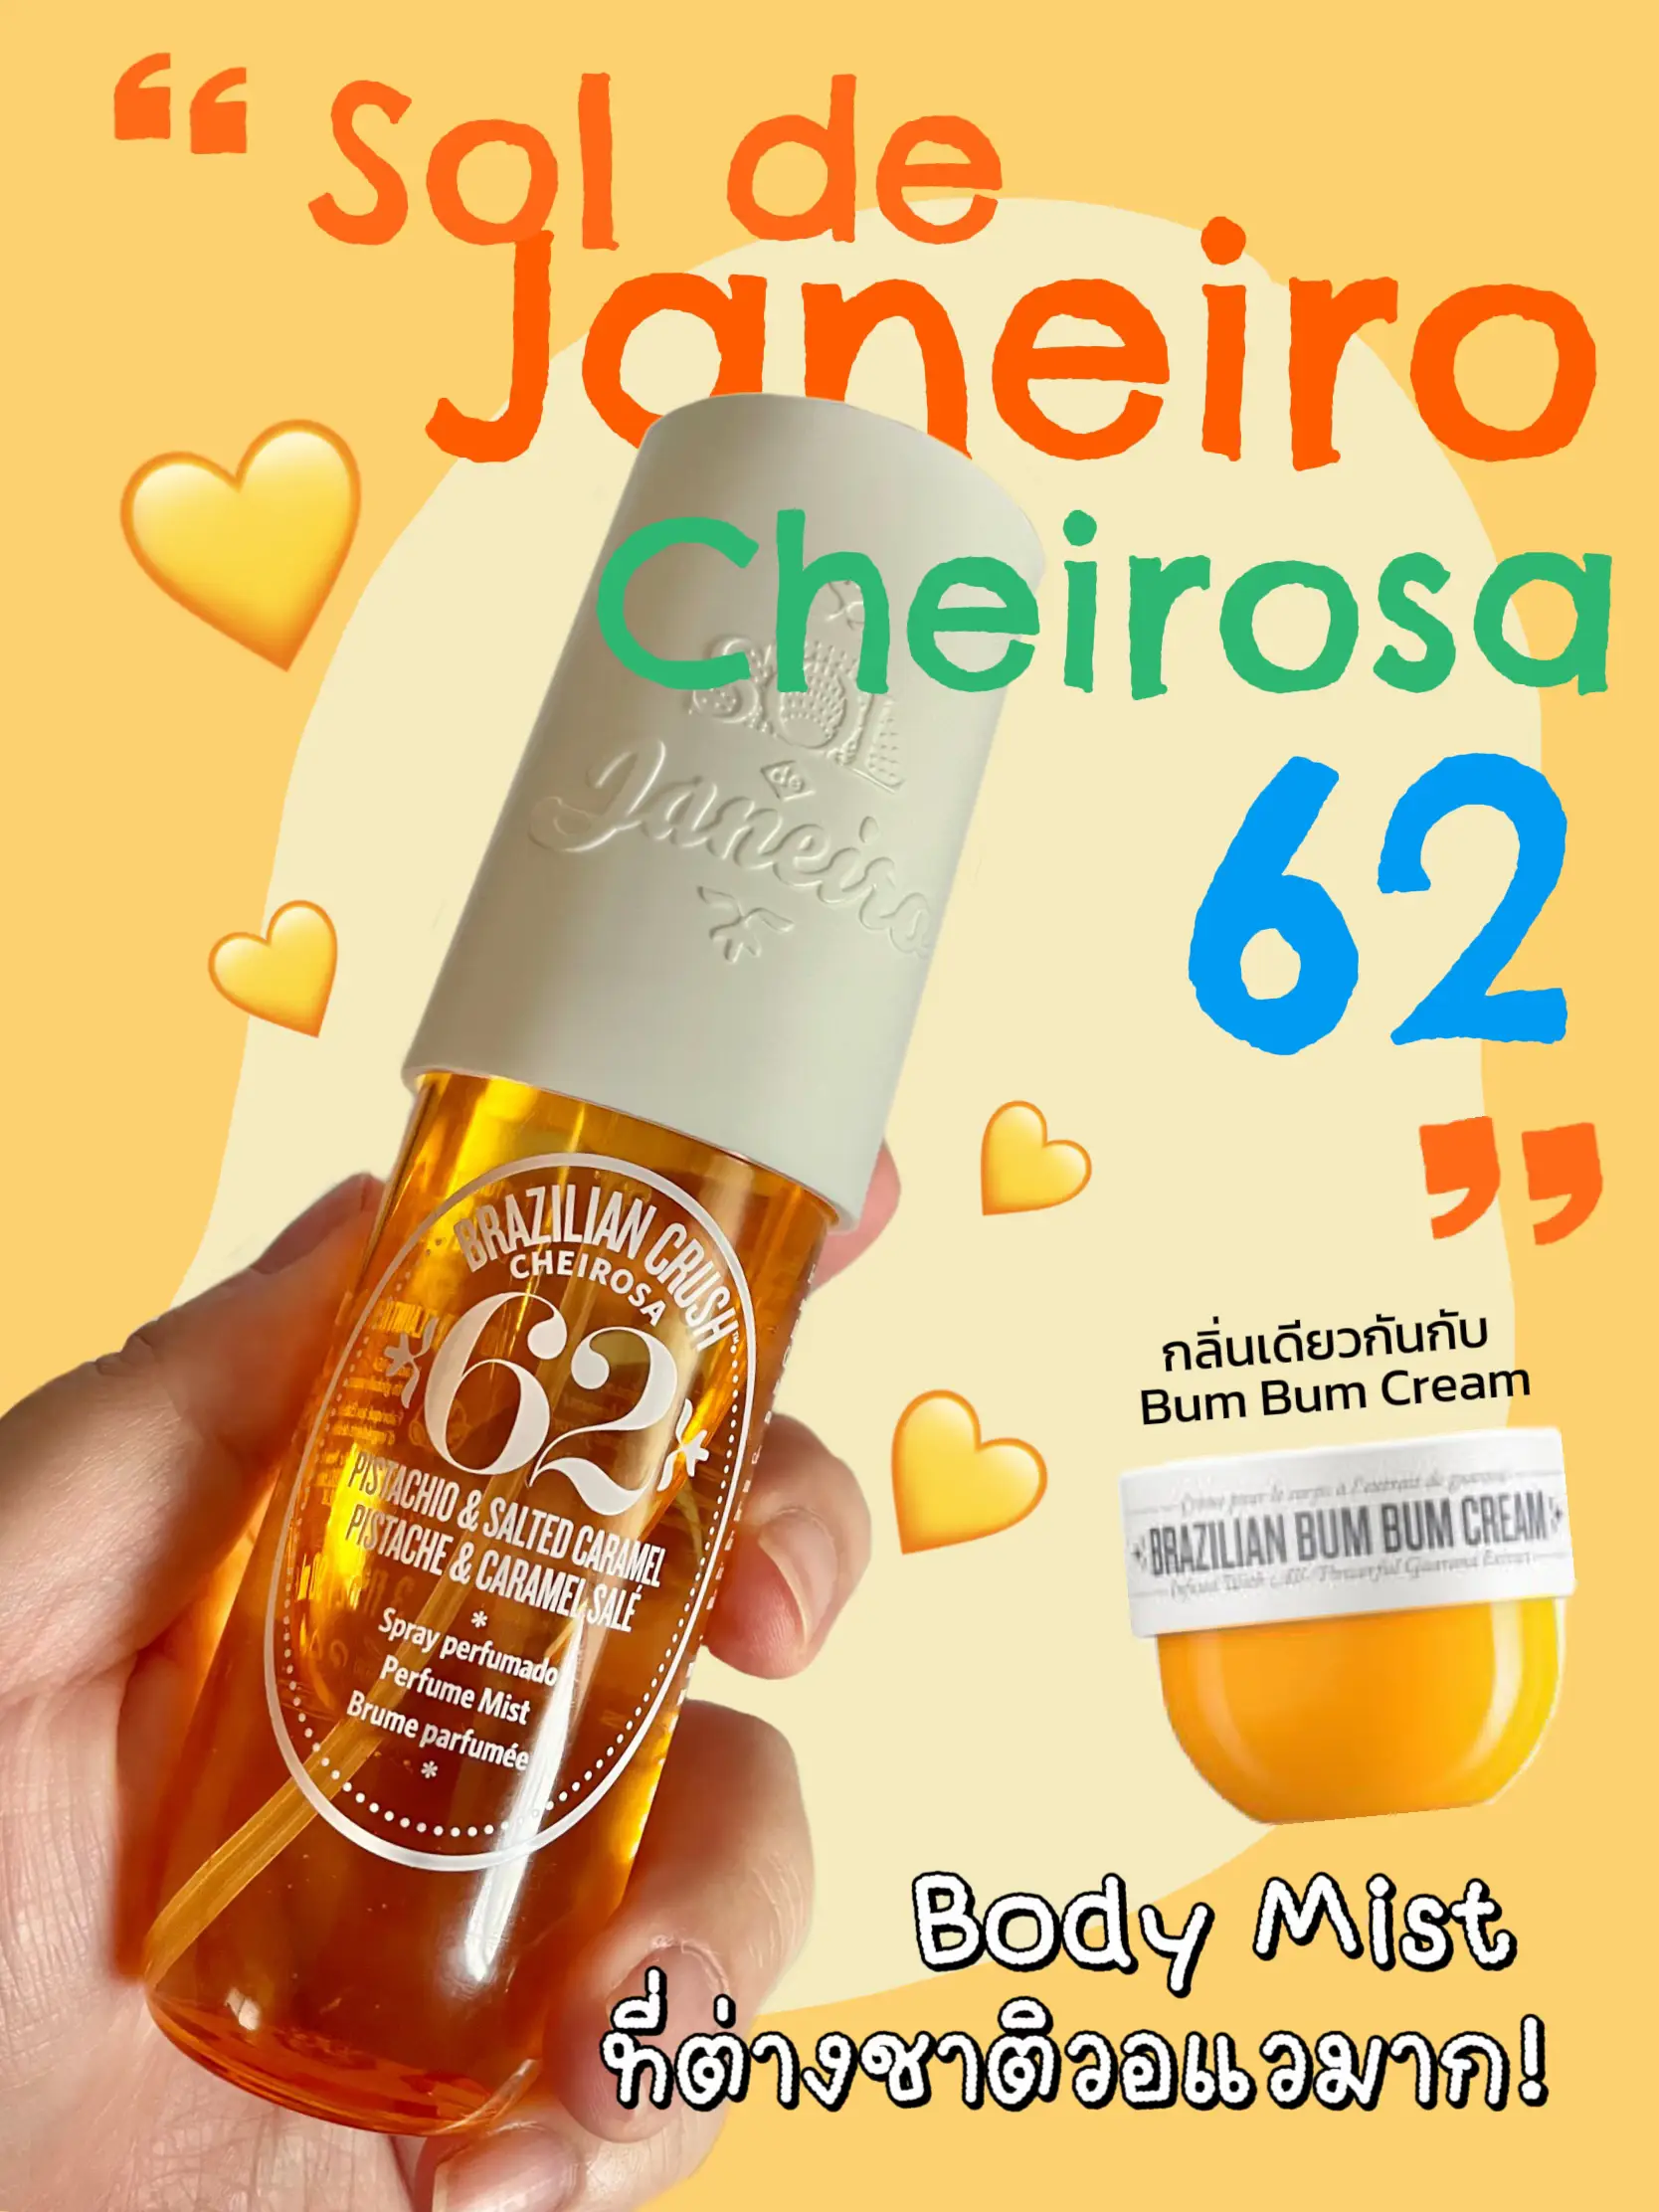 Sol de Janeiro + Cheirosa Tan Lines Hair & Body Fragrance Mist